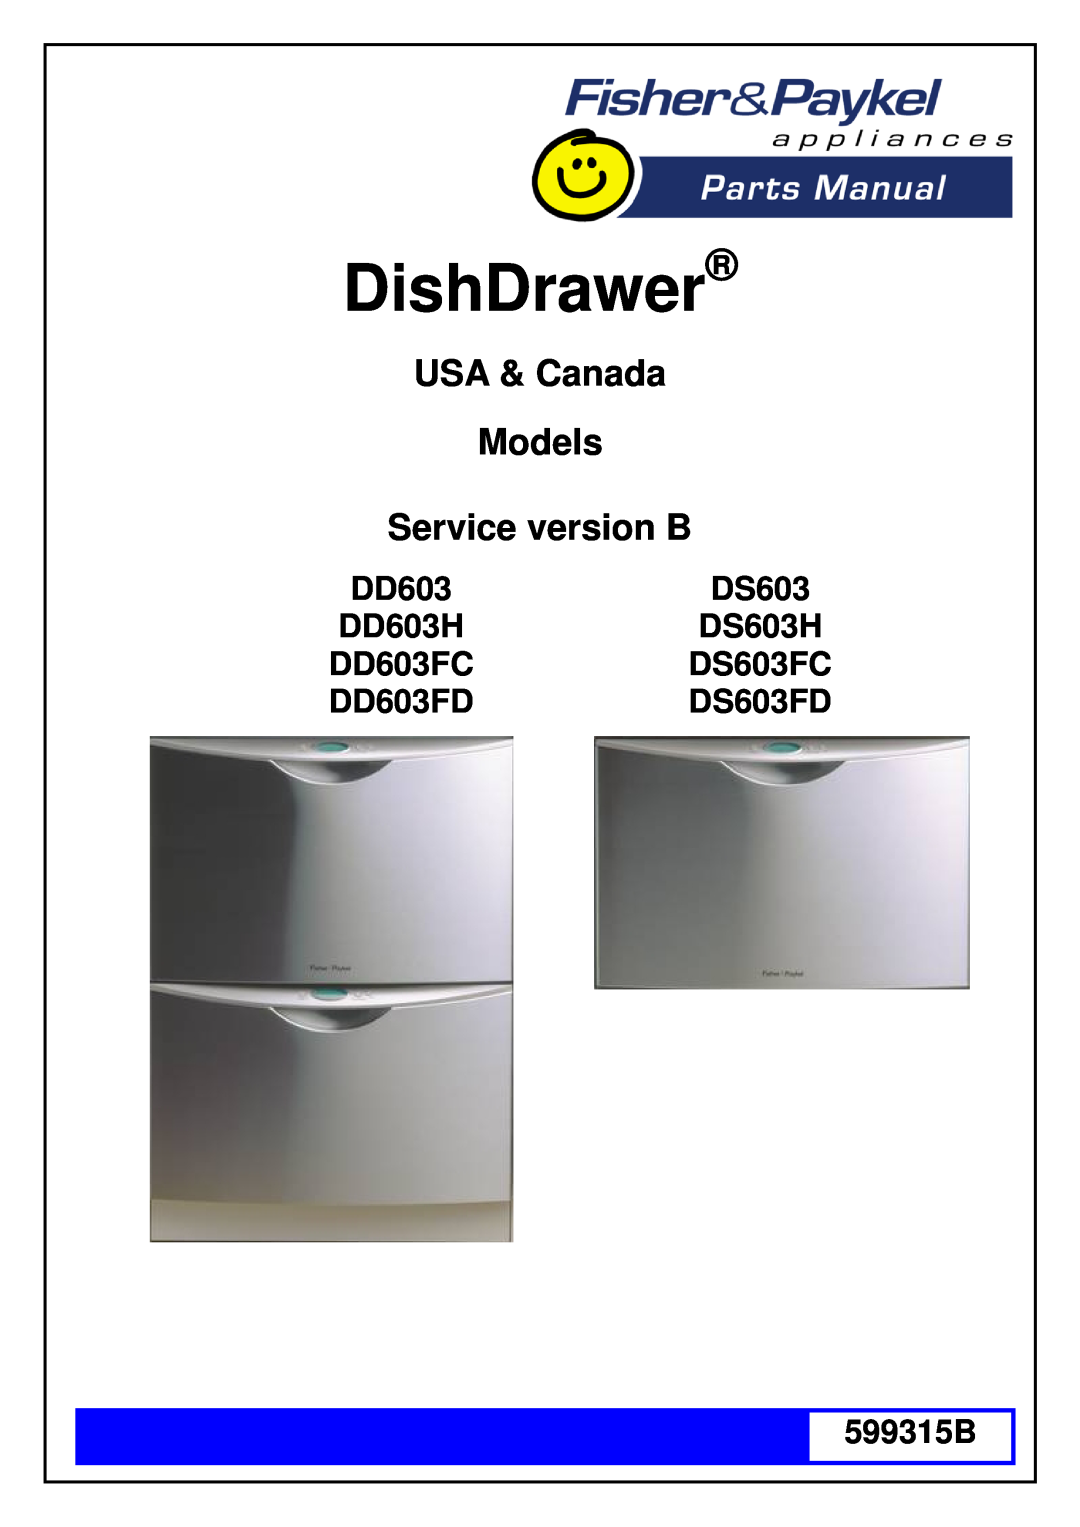 Fisher & Paykel DD603FC manual DishDrawer, USA & Canada Models Service version B, DD603H, DS603H, DS603FC, DD603FD 